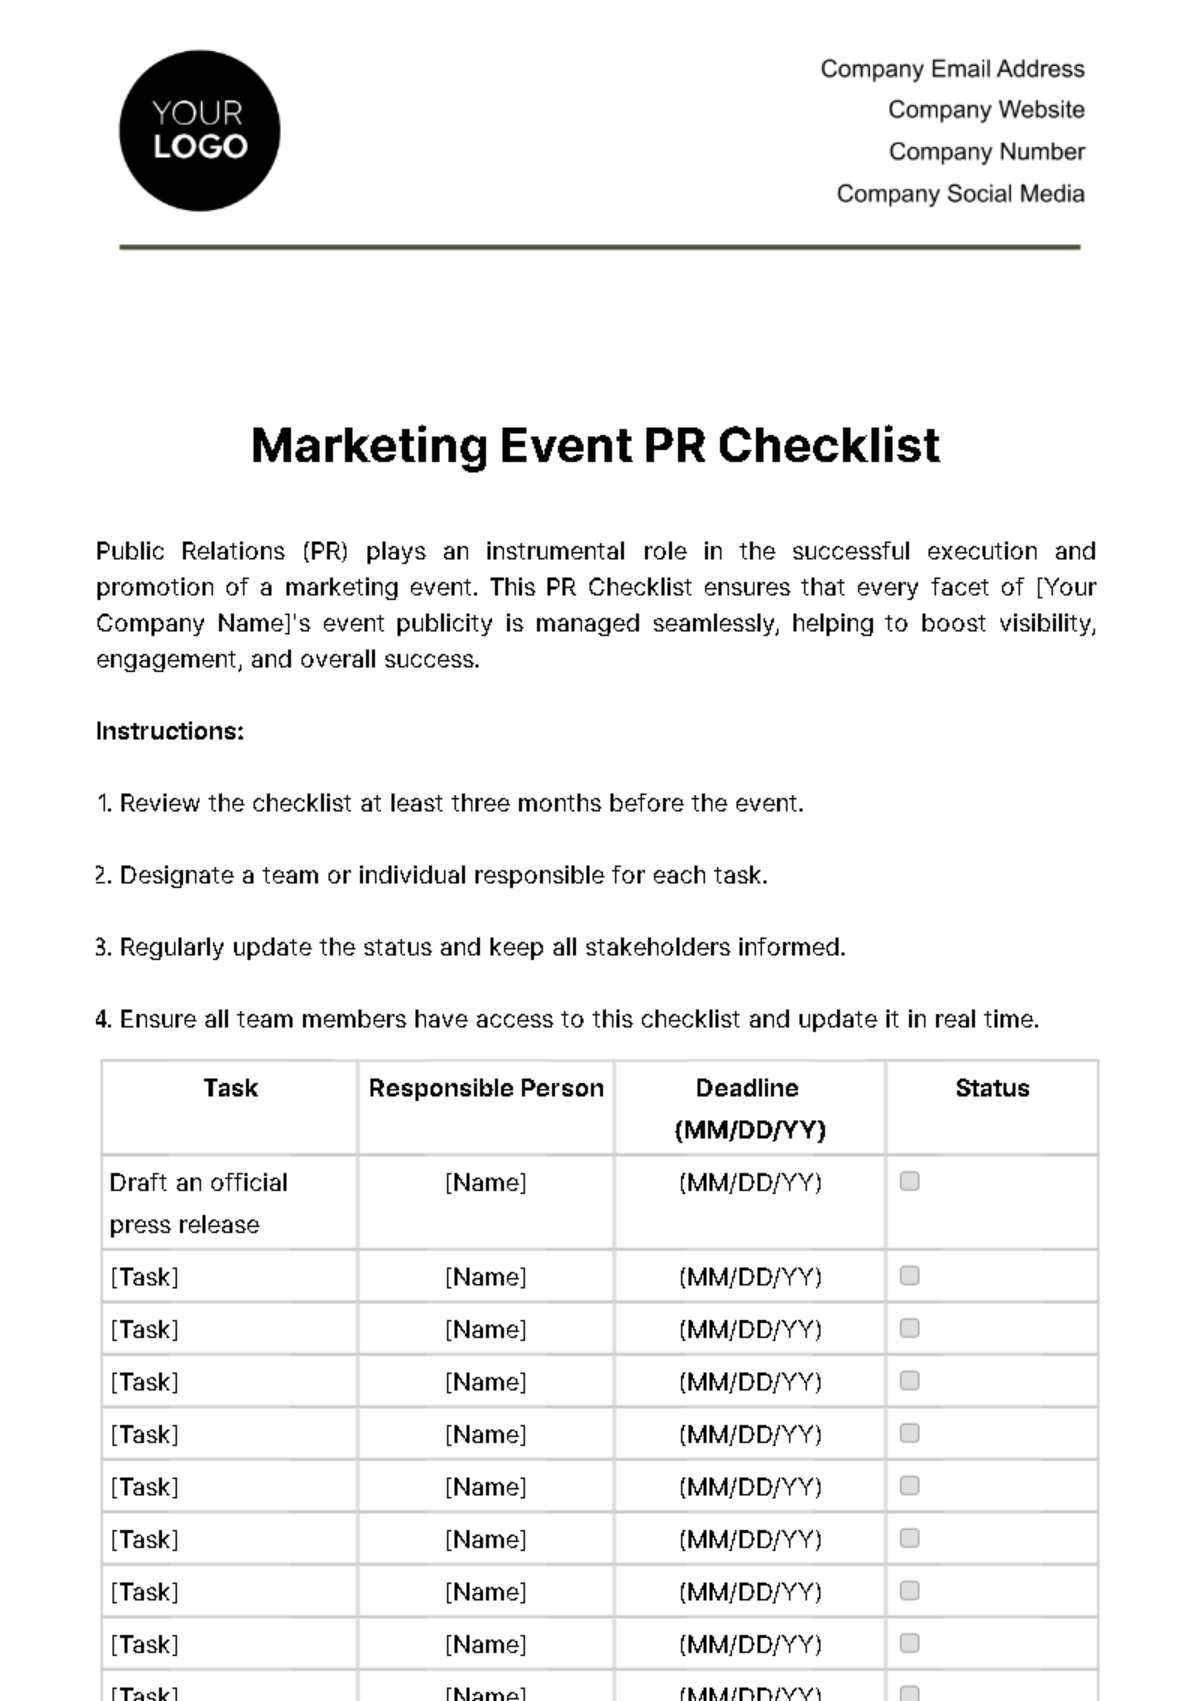 Free Marketing Event PR Checklist Template